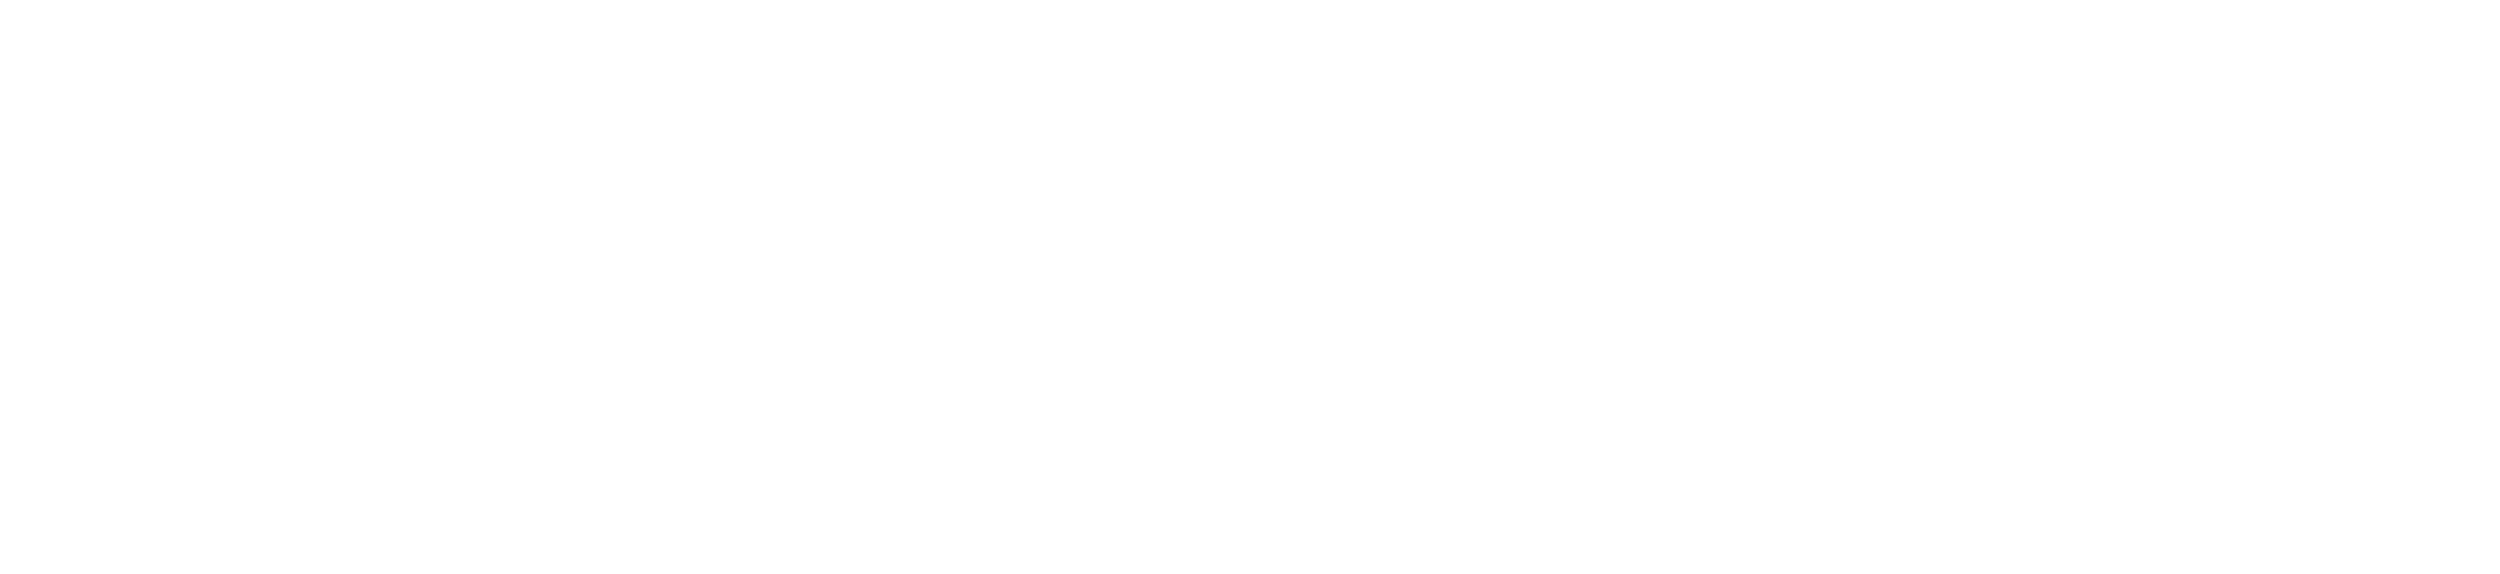 MHAAO - Mental Health &amp; Addiction Association of Oregon